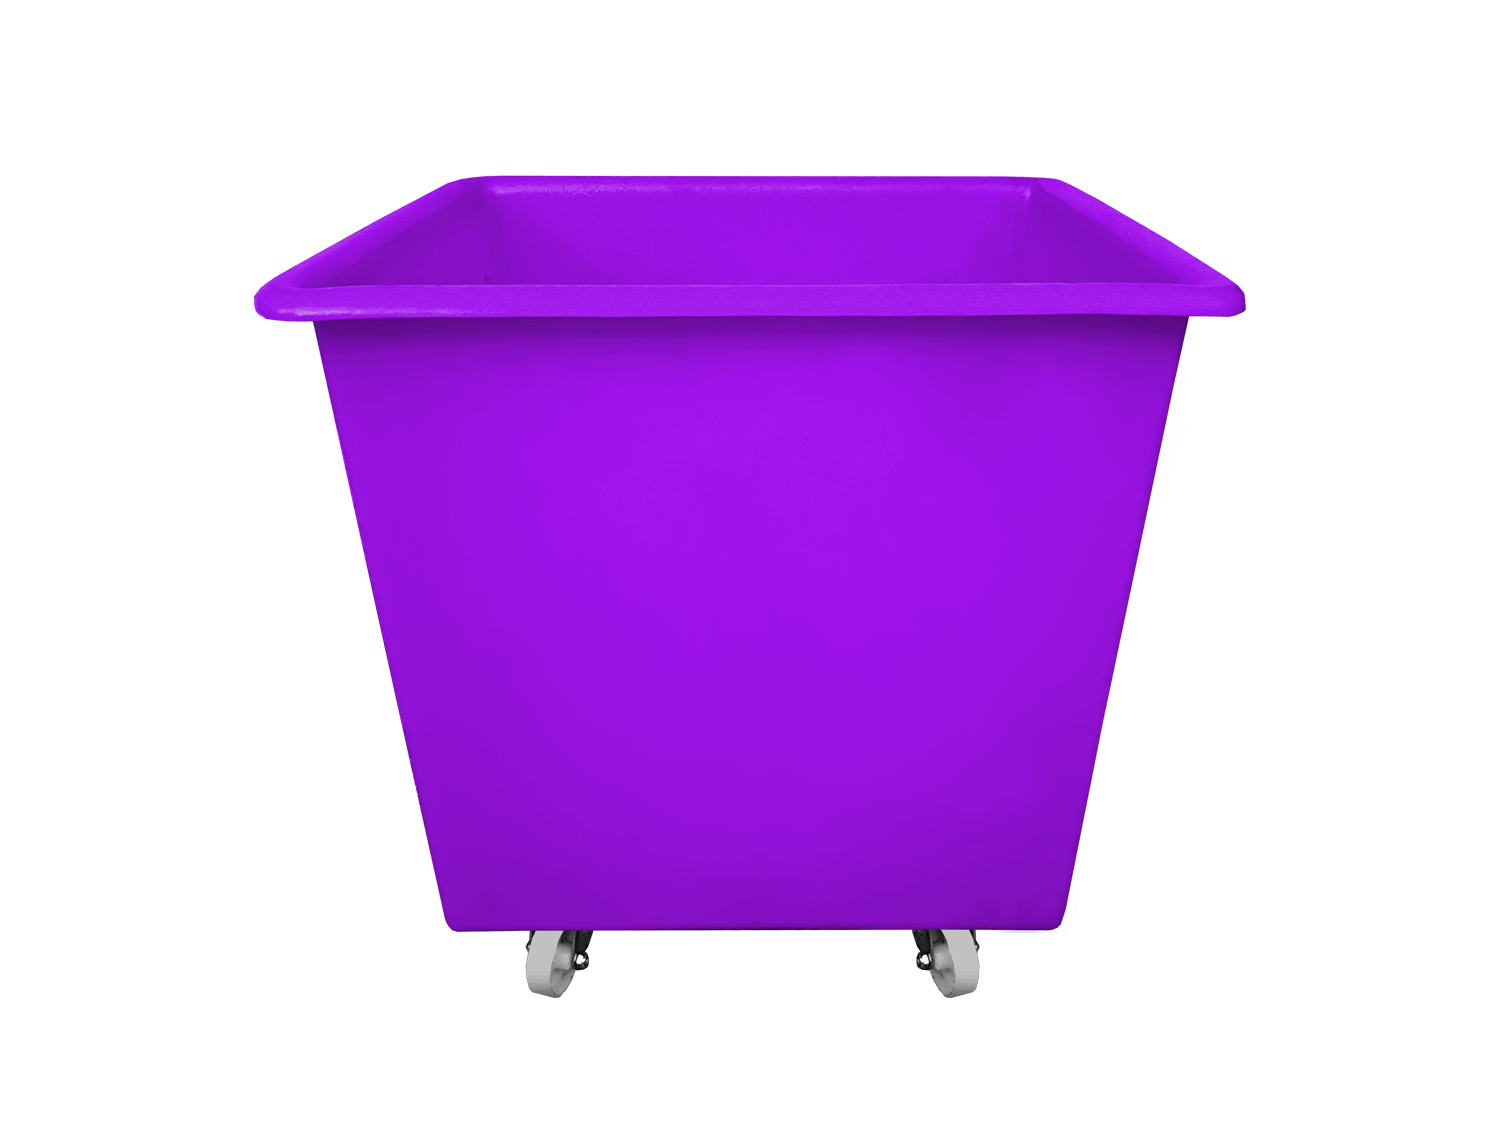 Hay Soaker WIth Wheels - purple